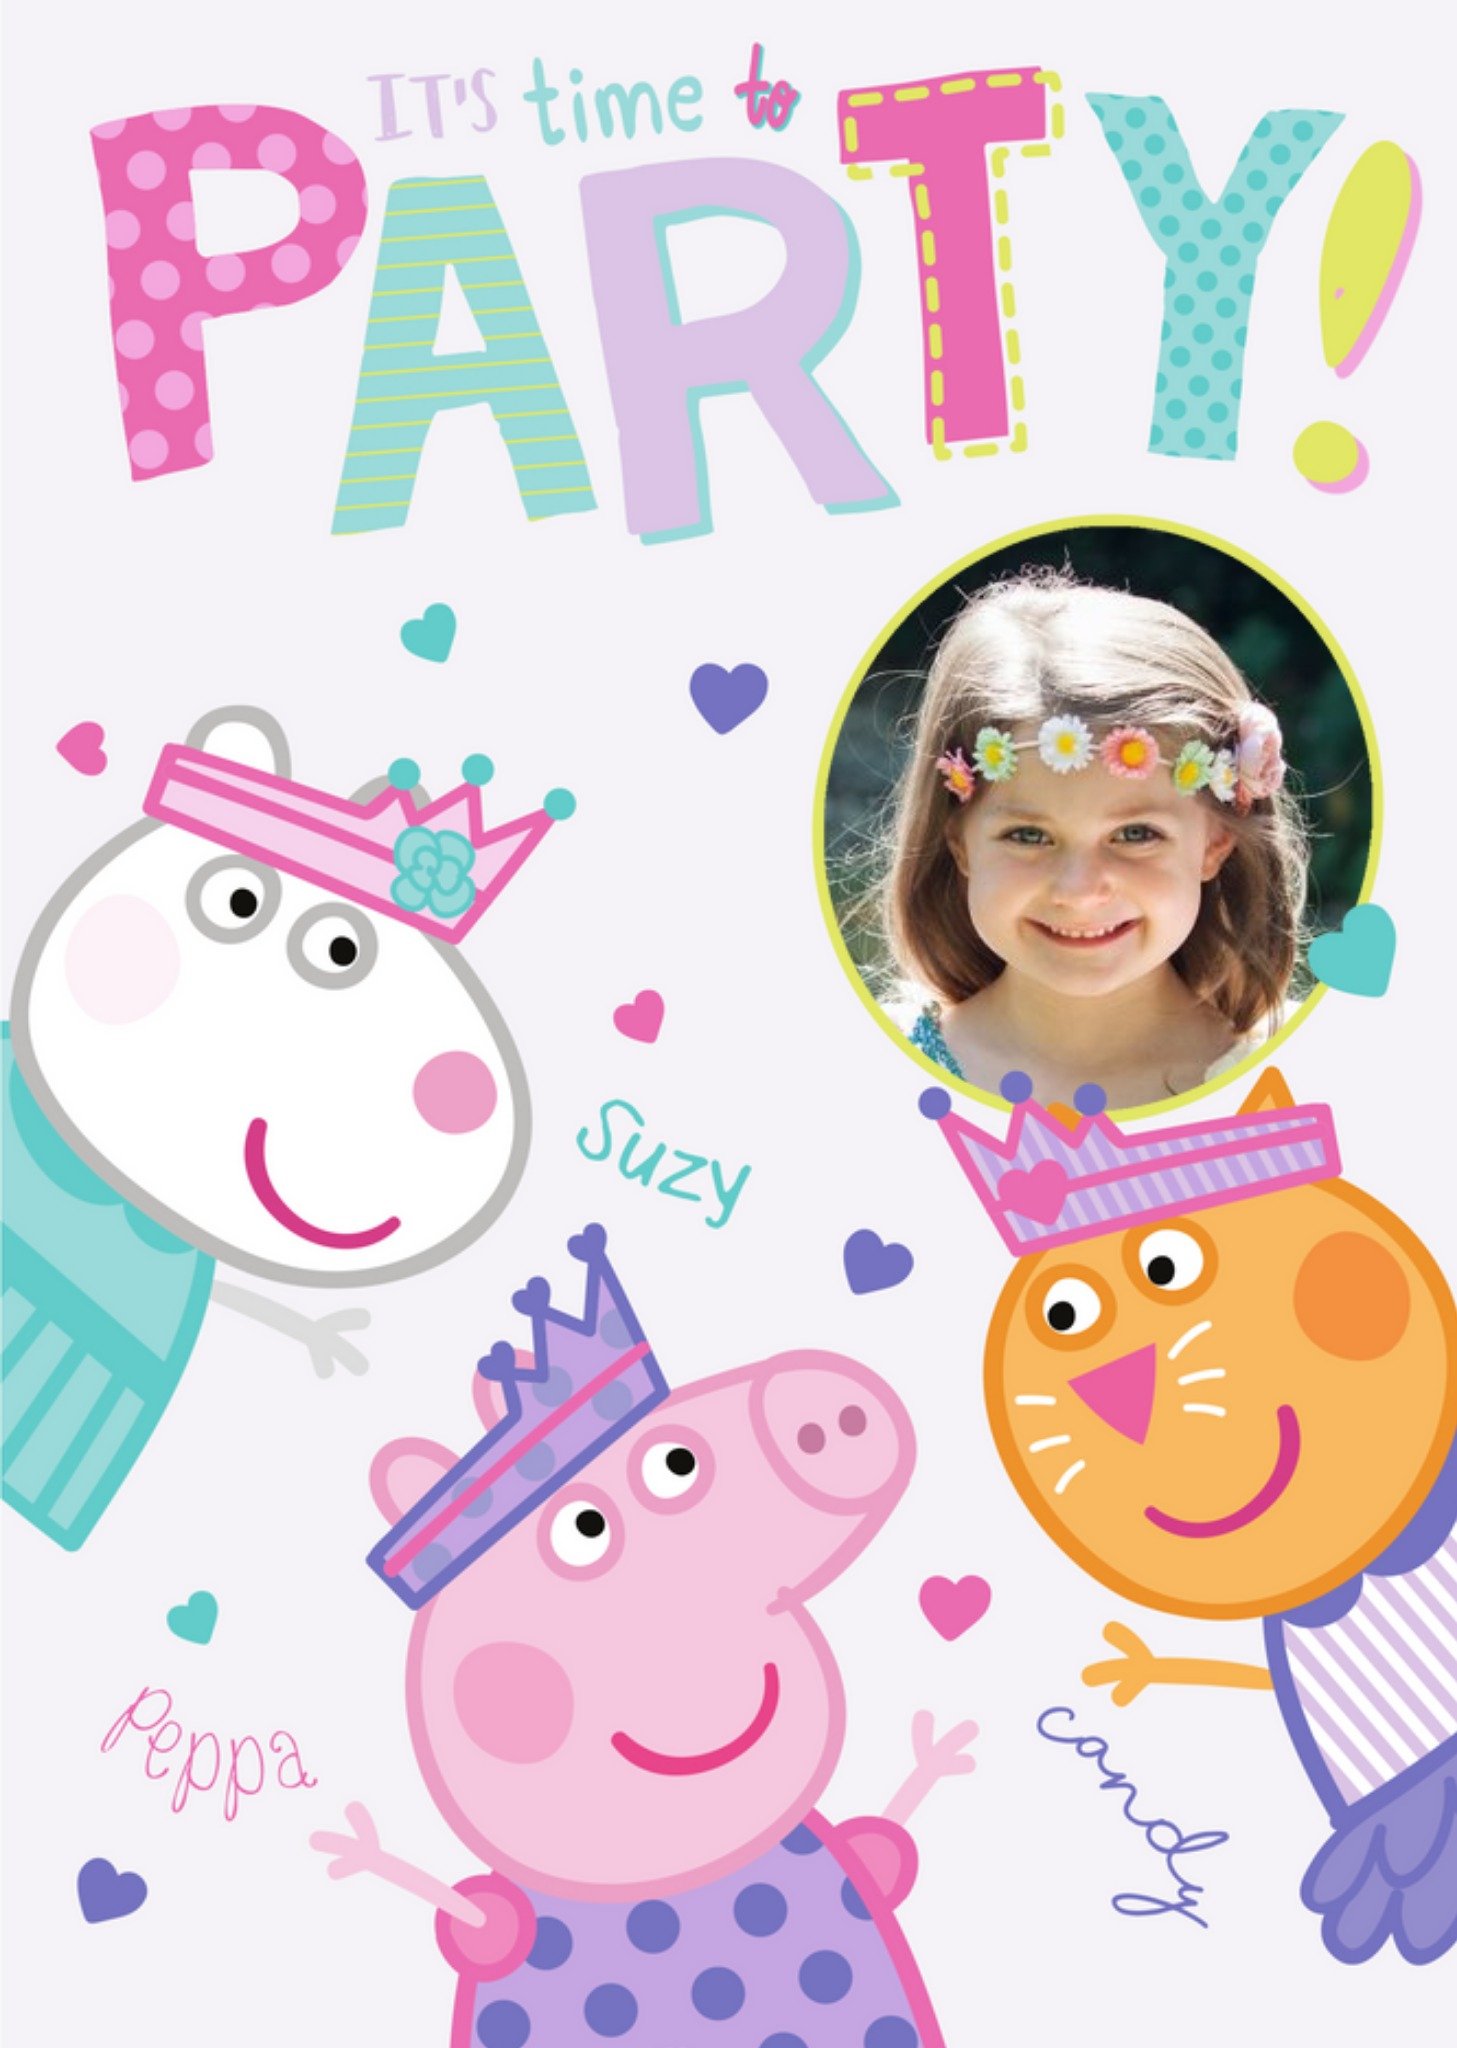 Peppa Pig Party Invitation Photo Upload Card, Standard